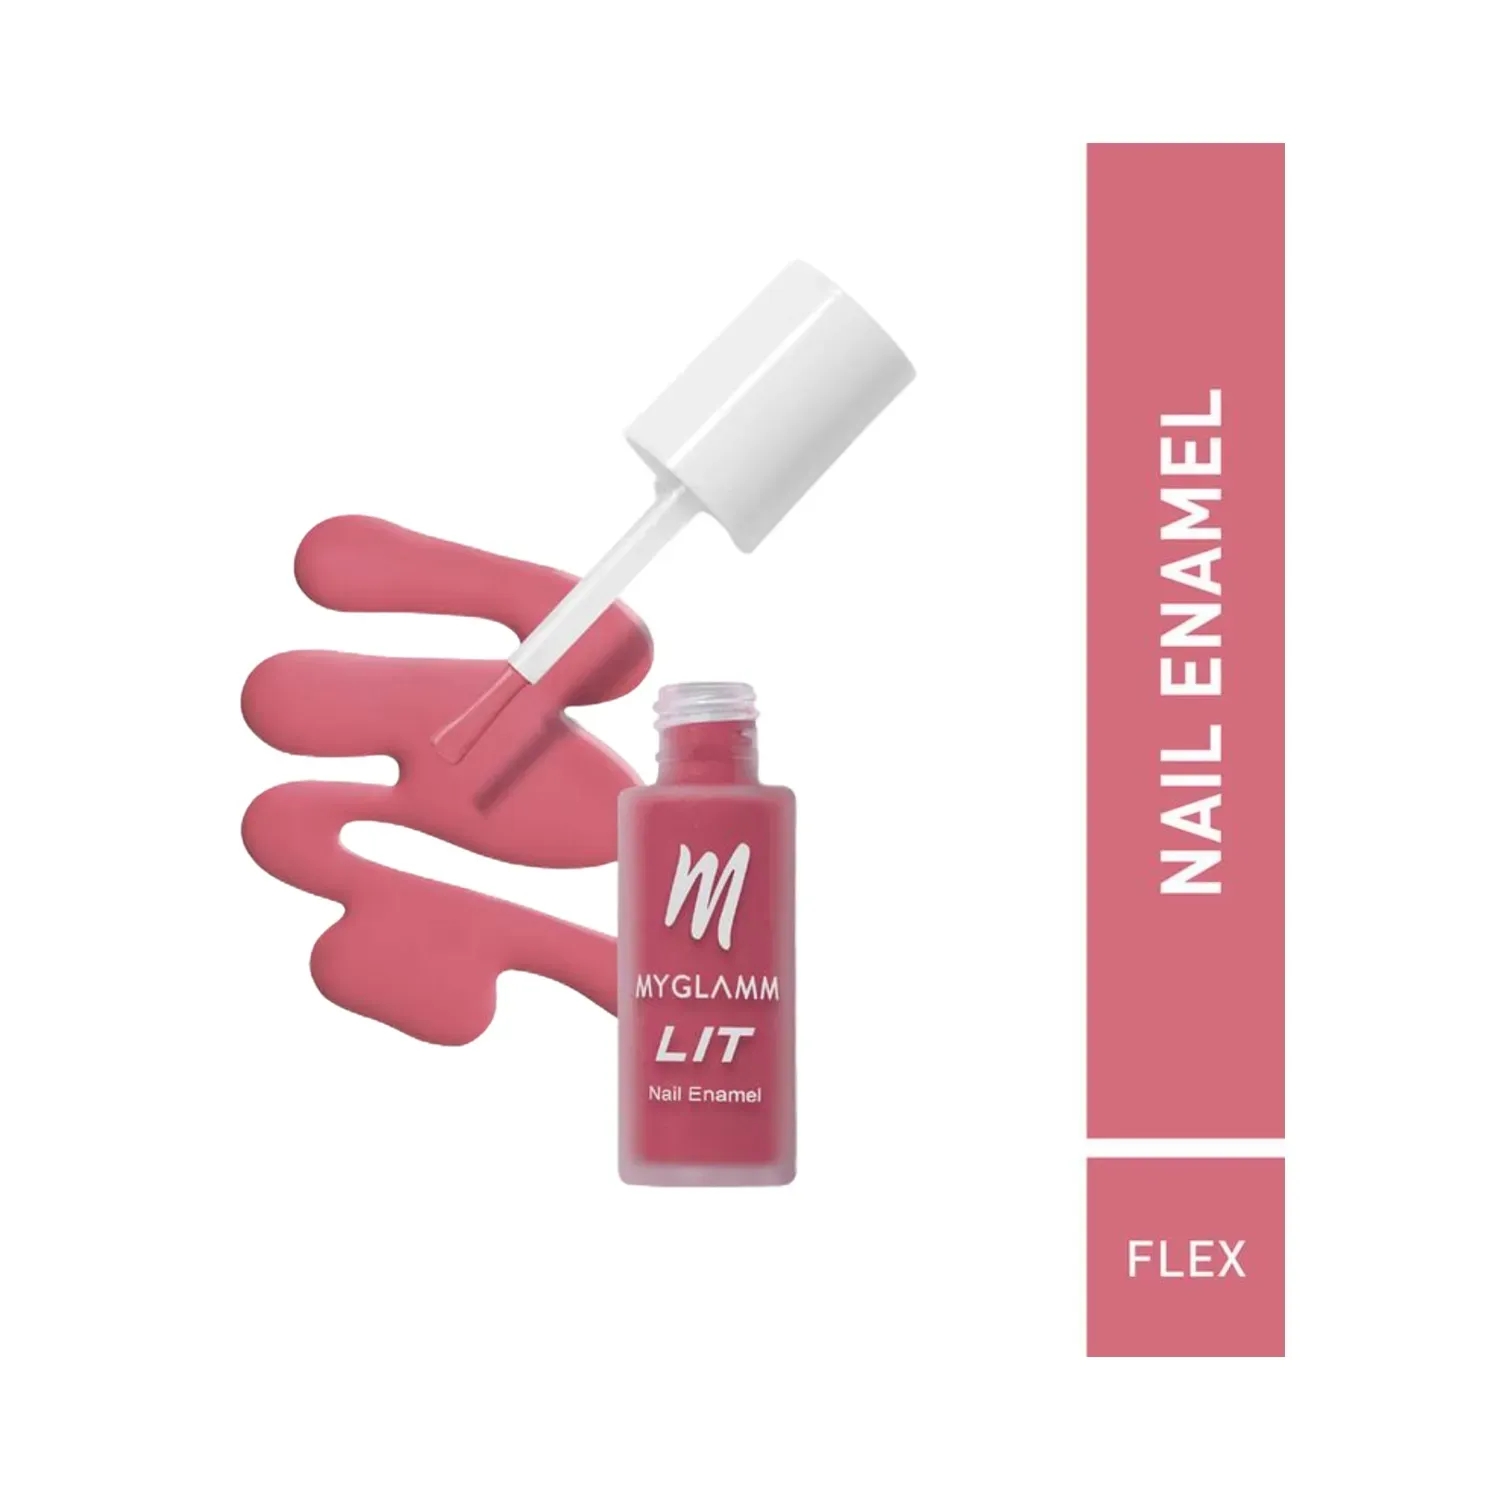 MyGlamm | MyGlamm LIT Matte Nail Enamel - Flex (7ml)